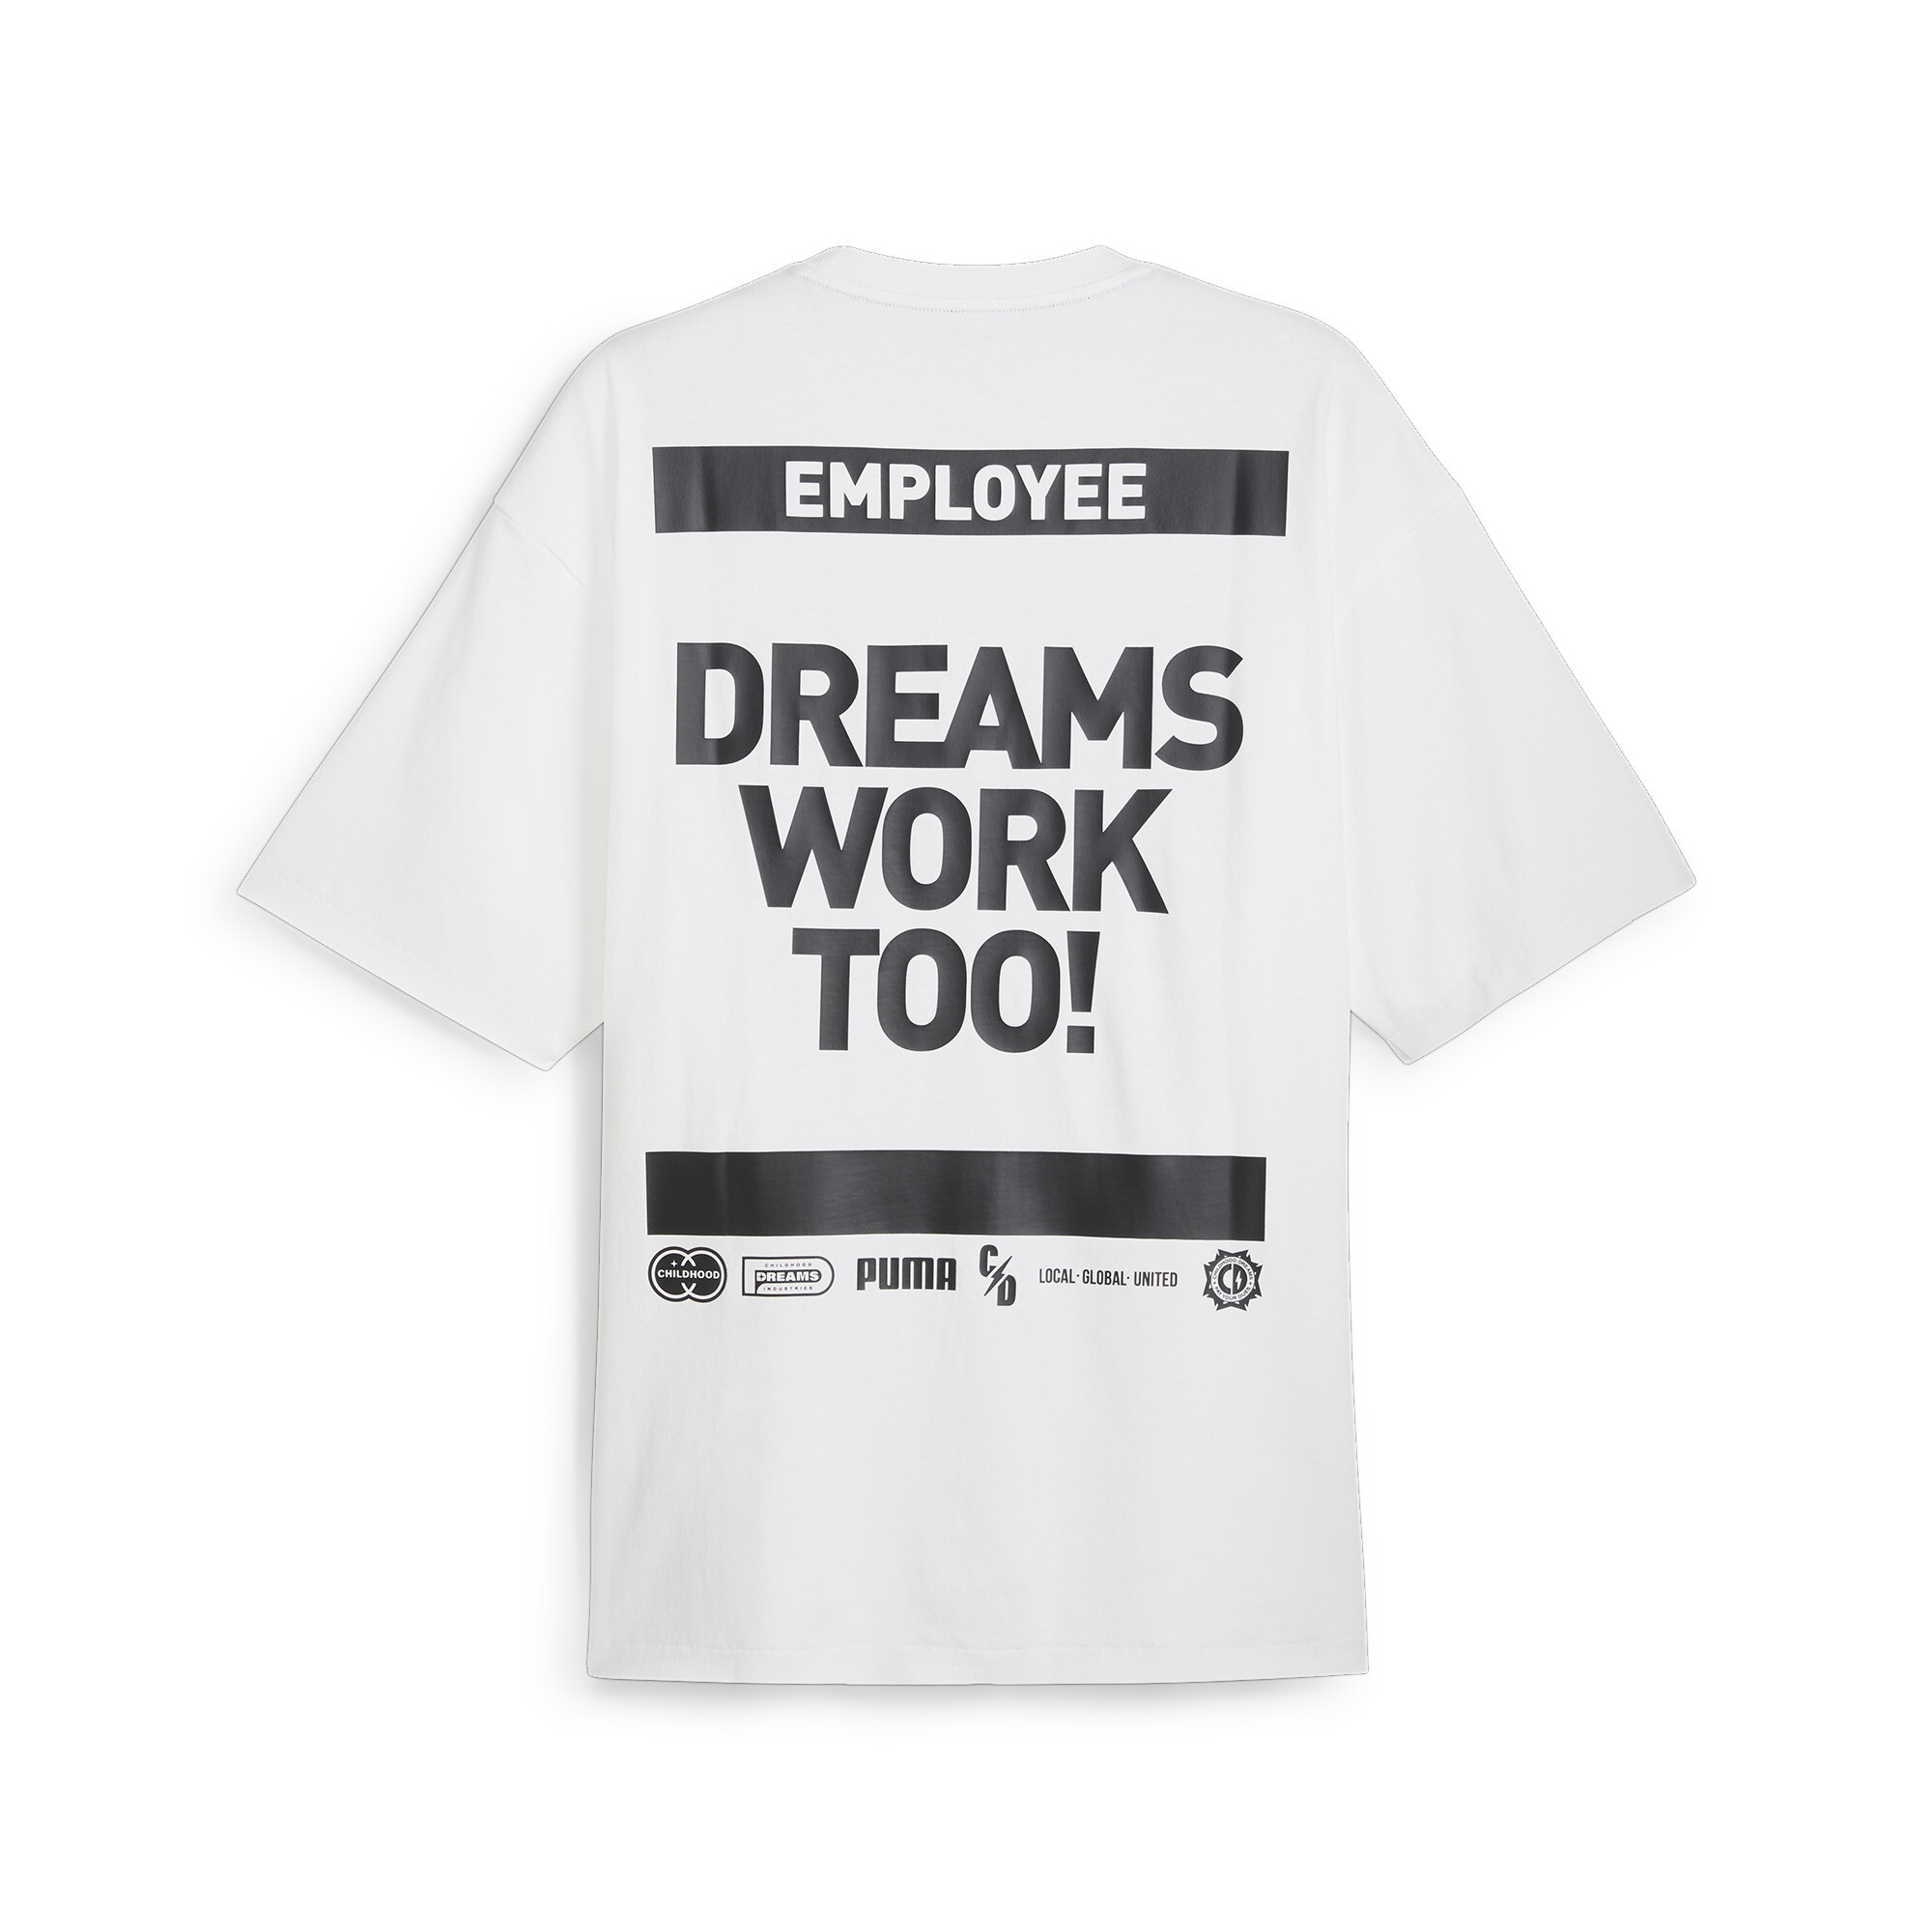 Men's PUMA X CHILDHOOD DREAMS Mesmerize Basketball T-Shirt In White, Size 2XL